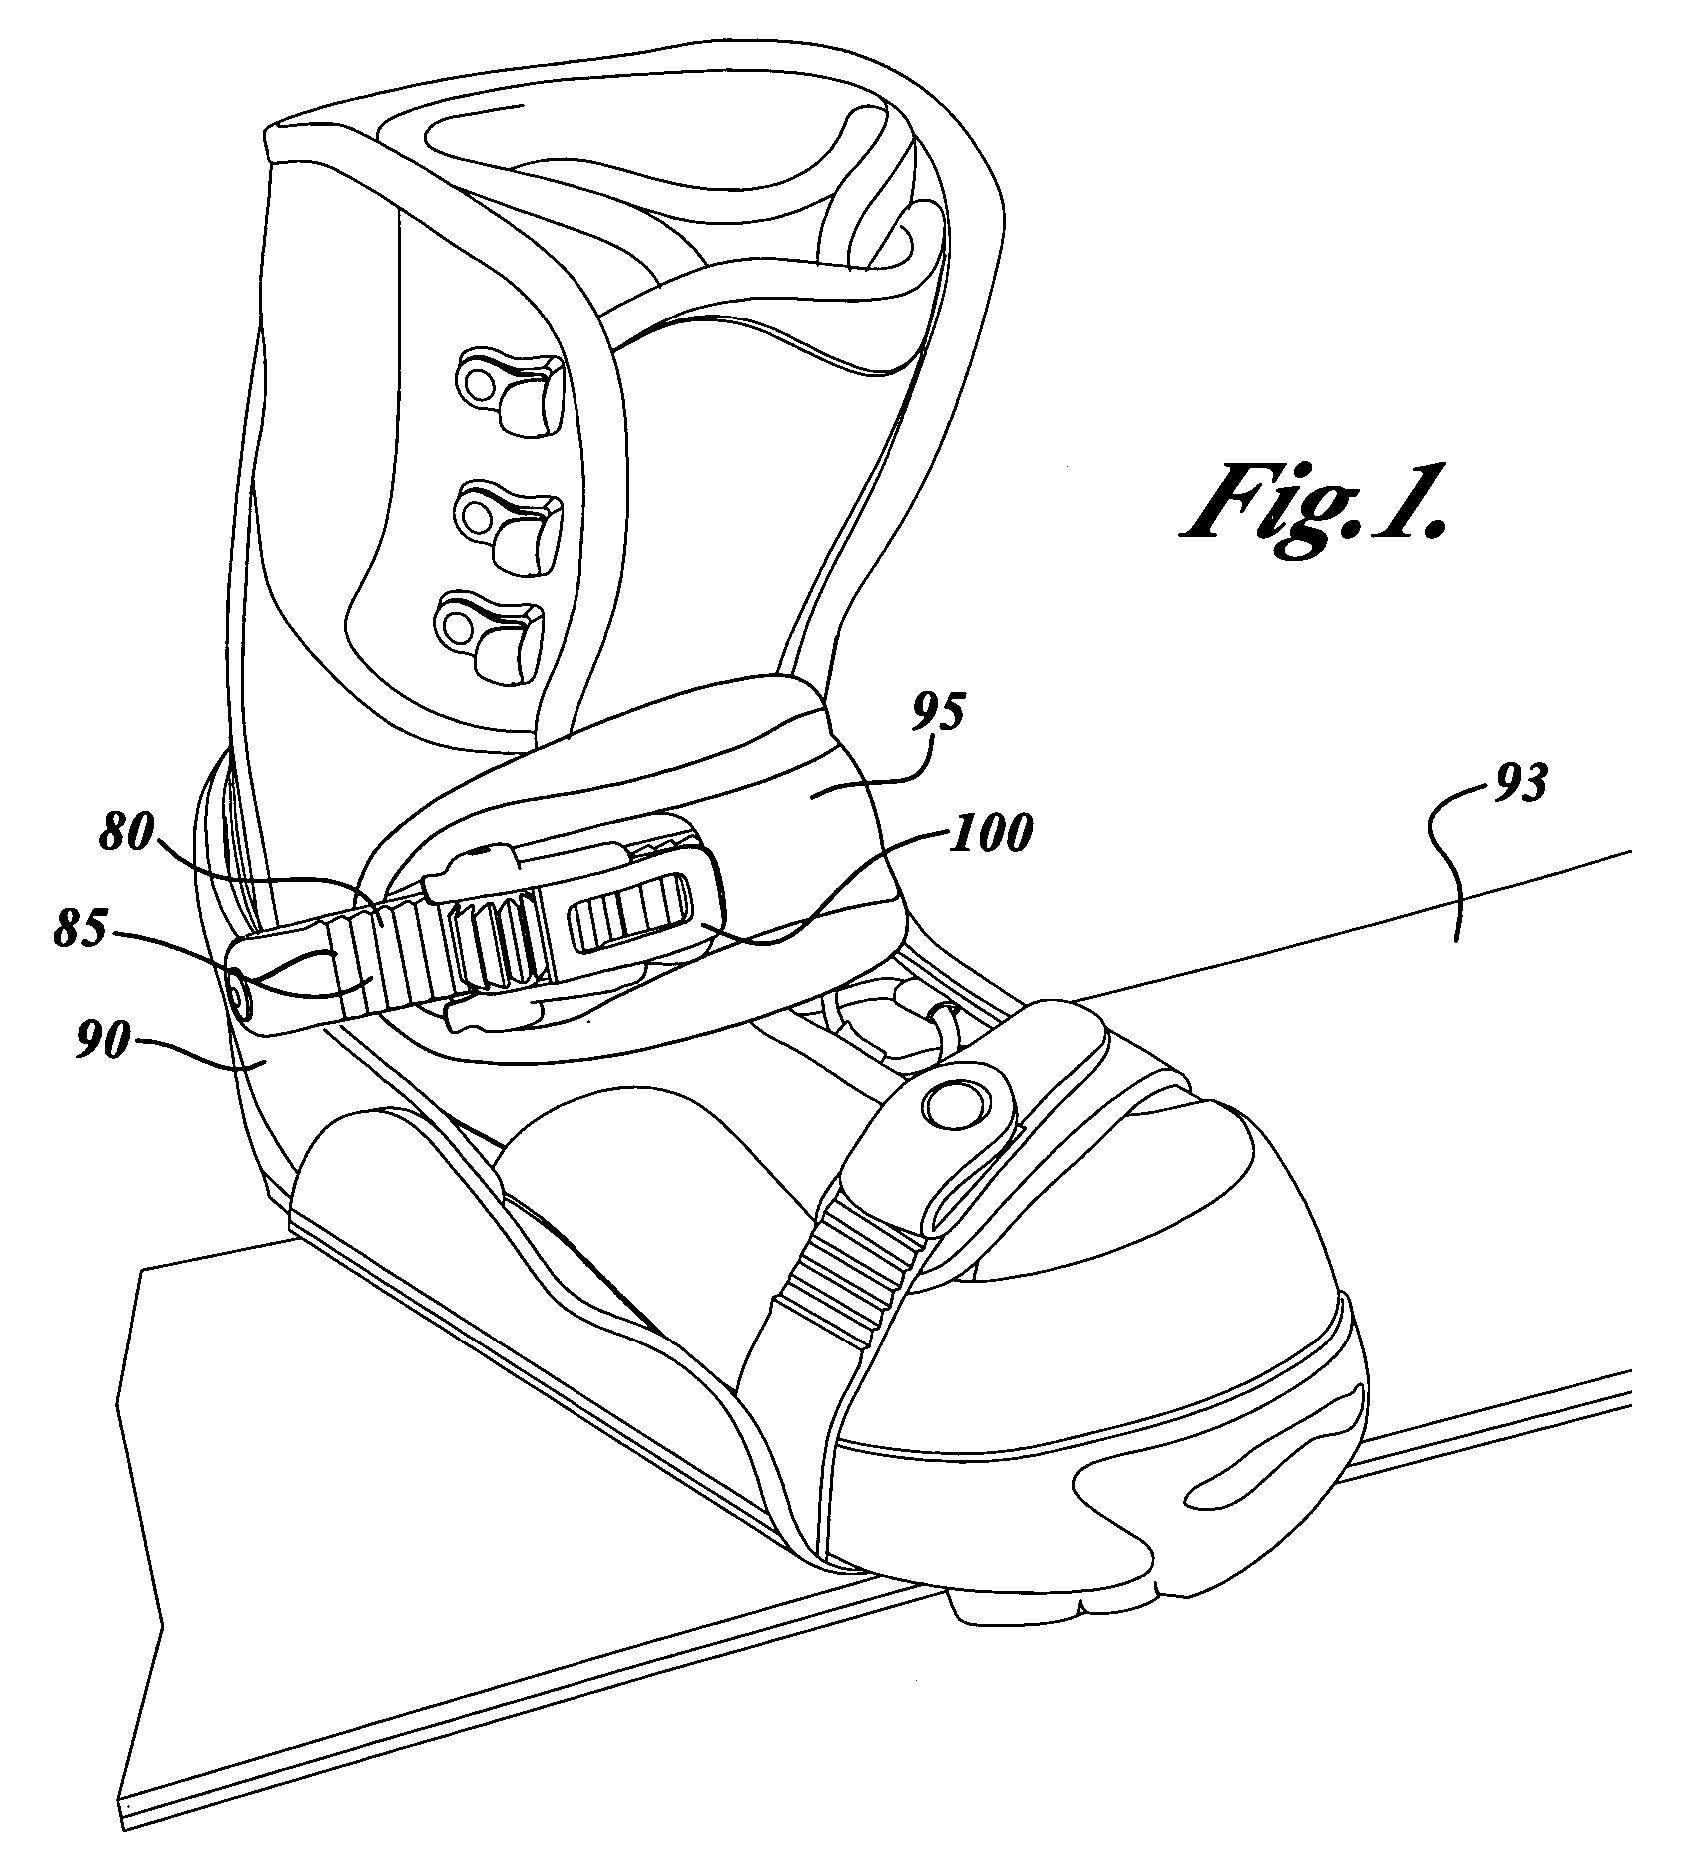 Ratchet-type buckle and snowboard binding